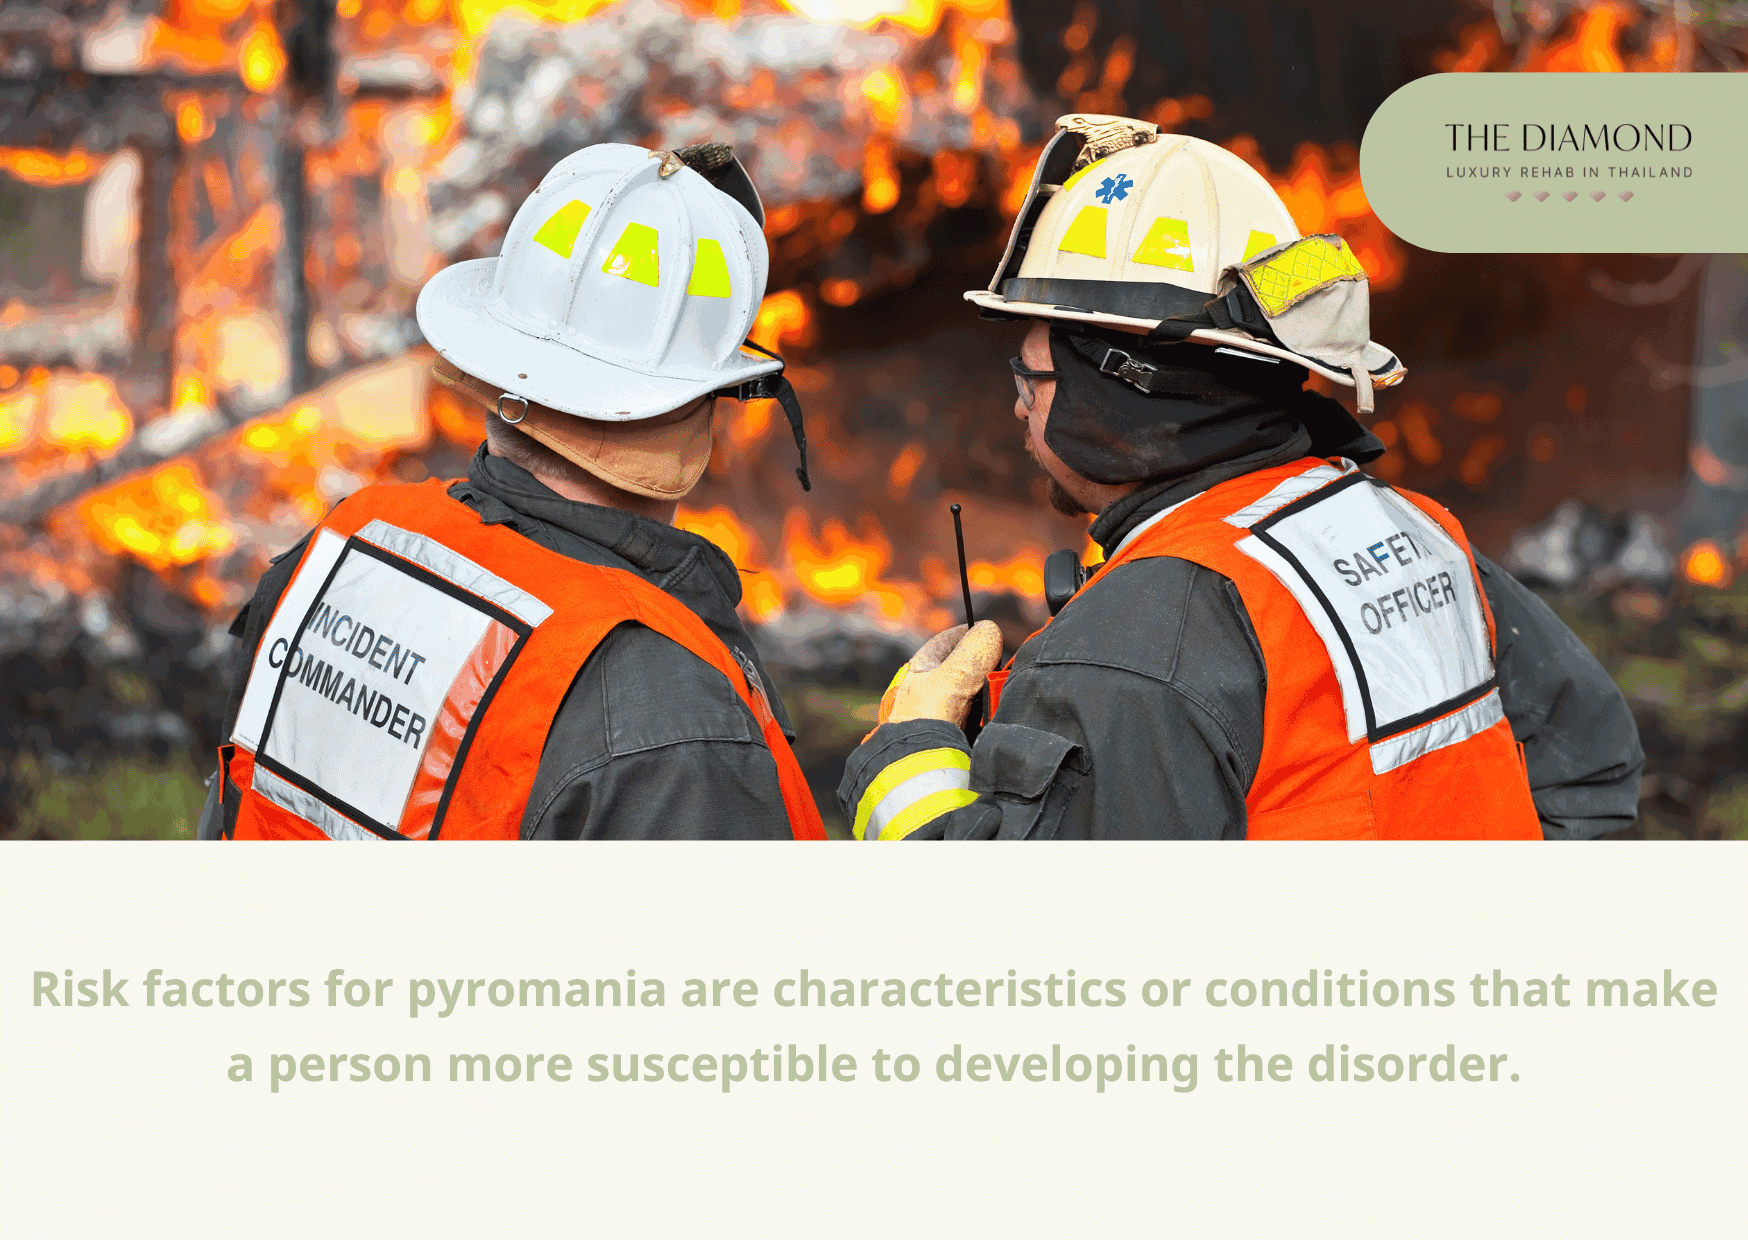 Pyromania risk factors